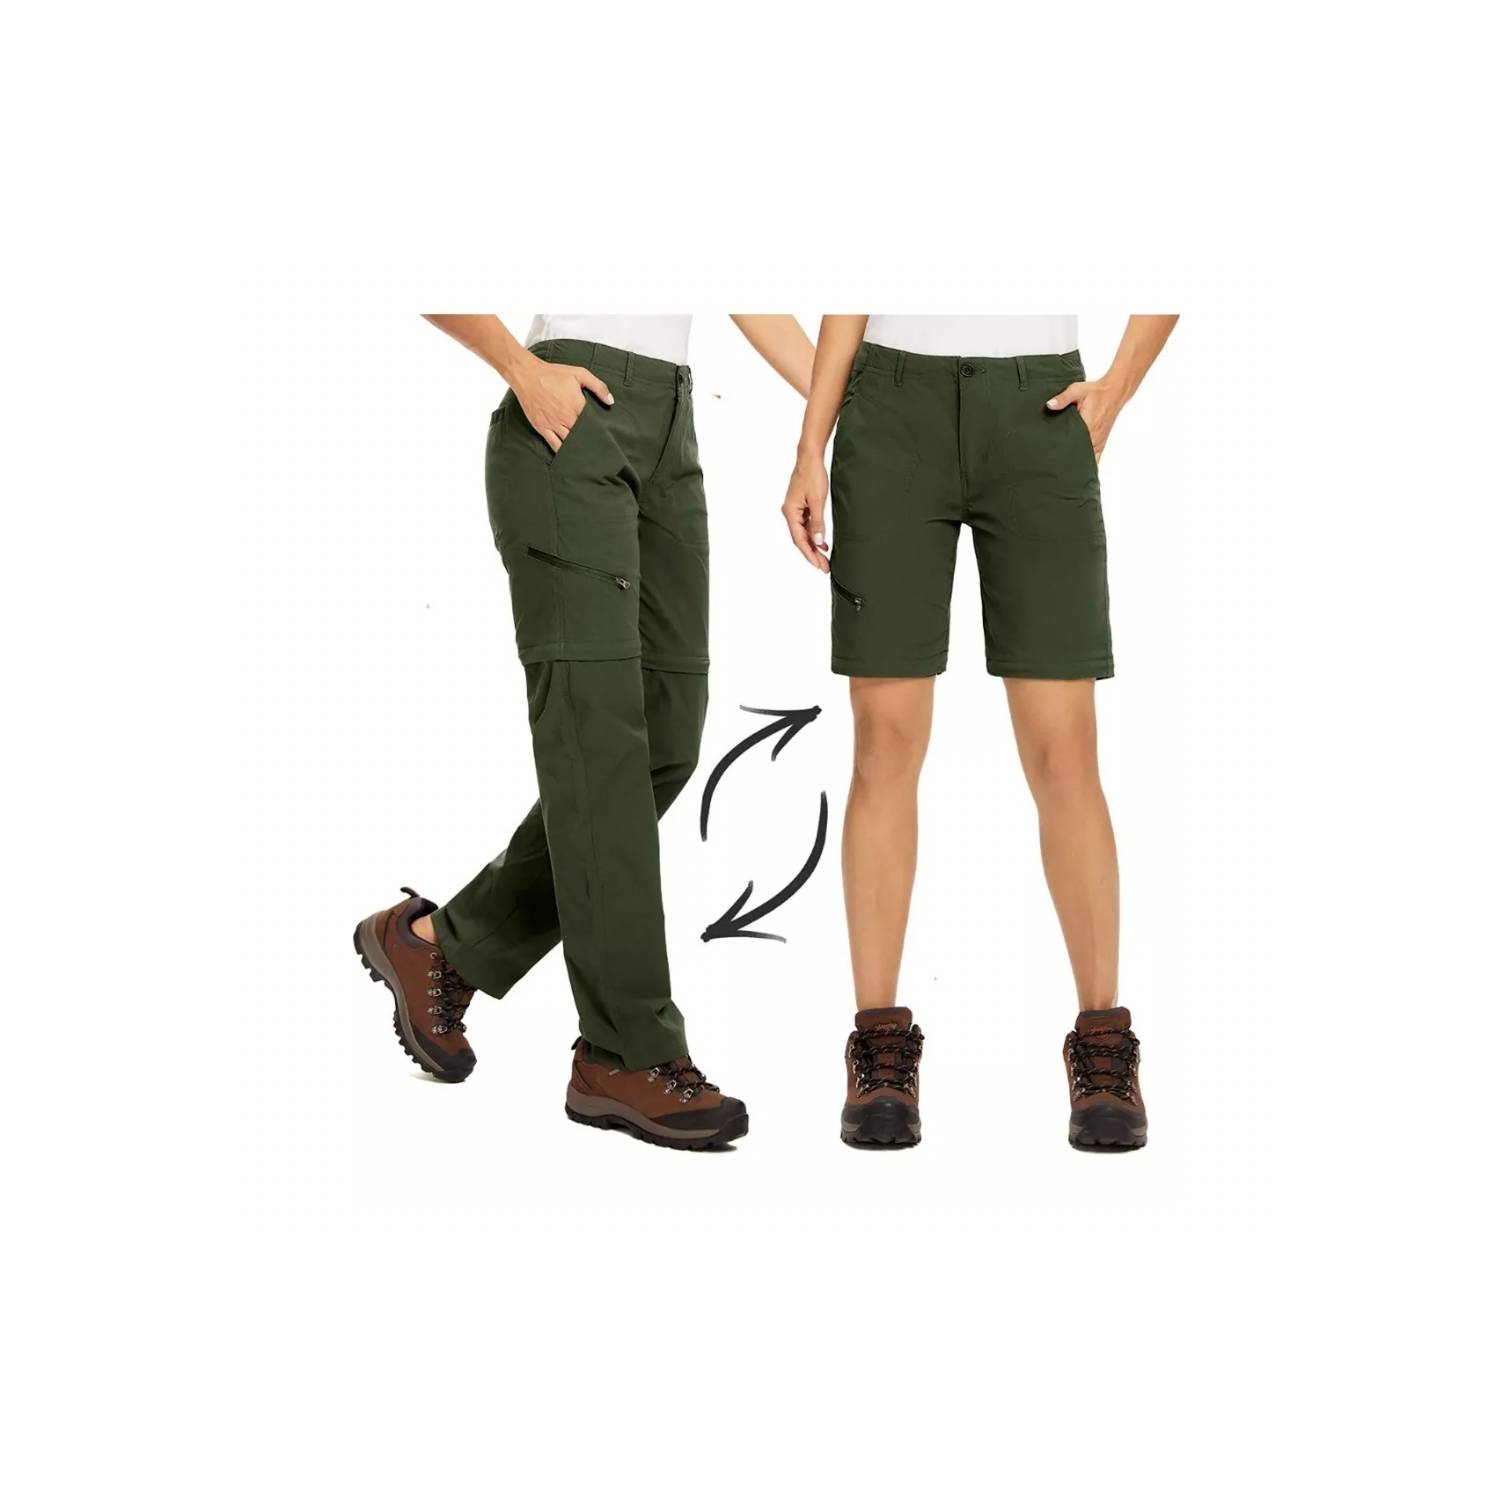 GENERICO Pantalon Trekking Mujer Secado Rapido Desmontable Verde